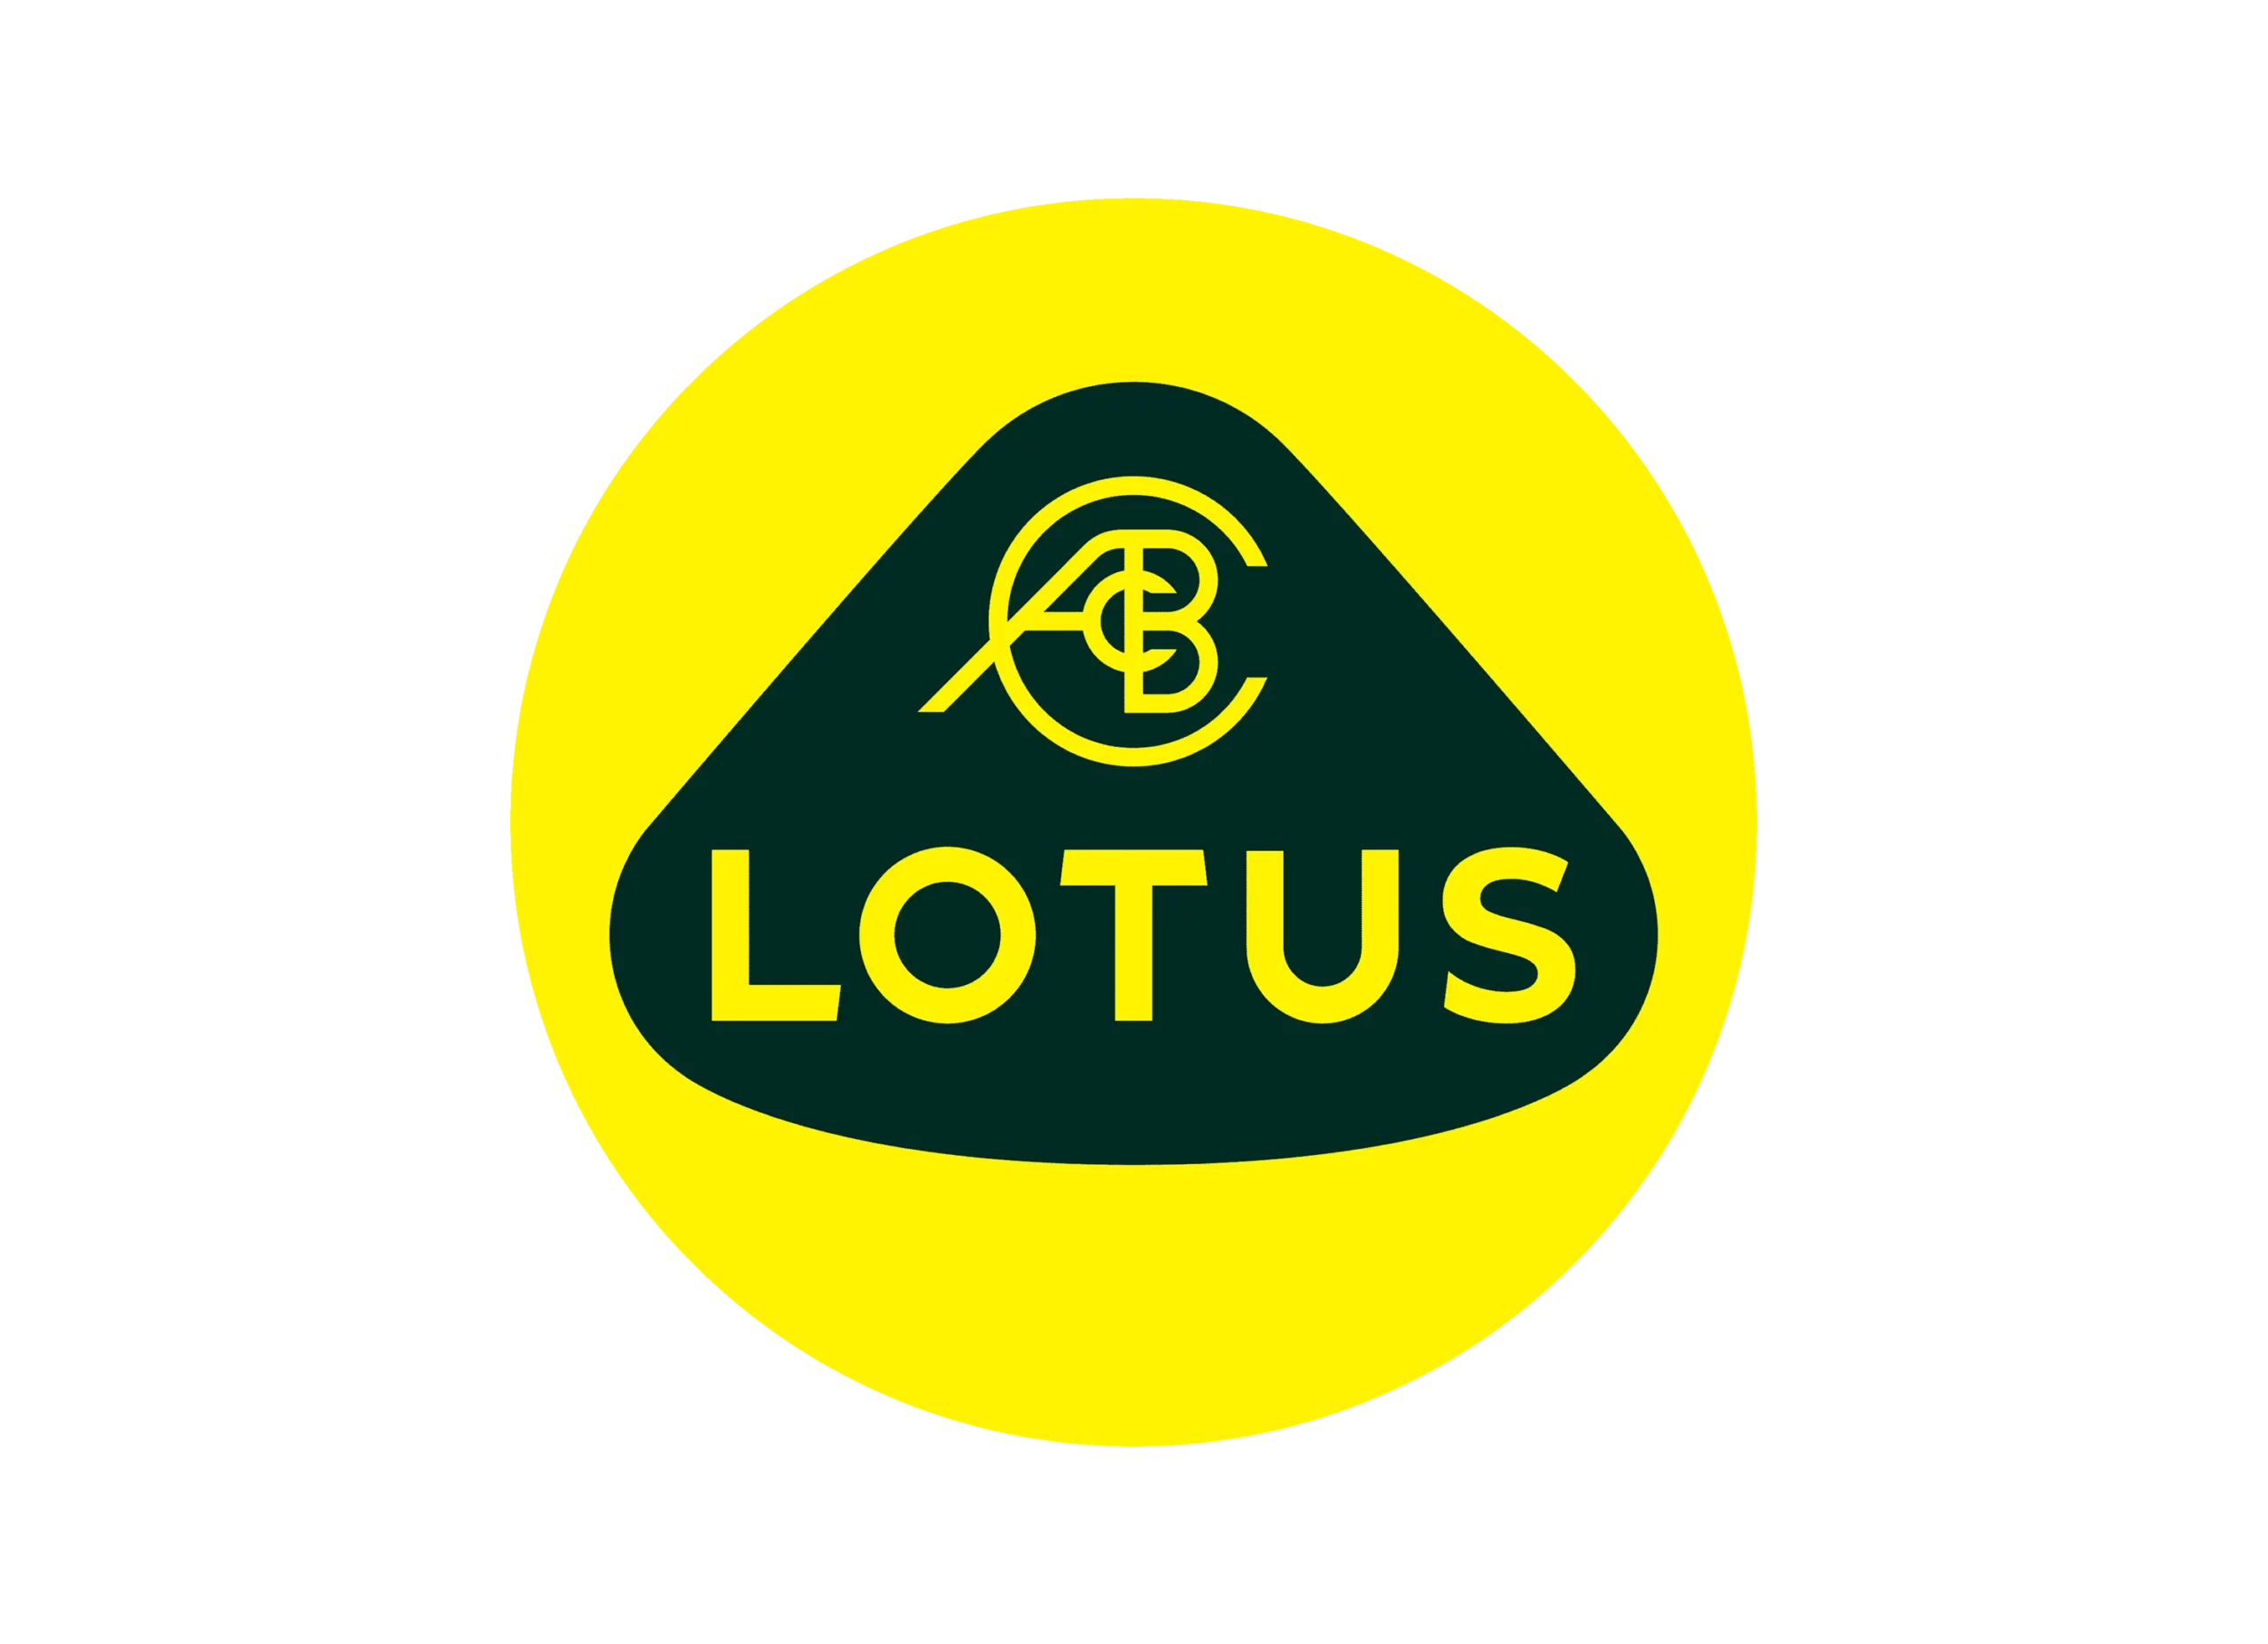 Lotus logo 2019-present